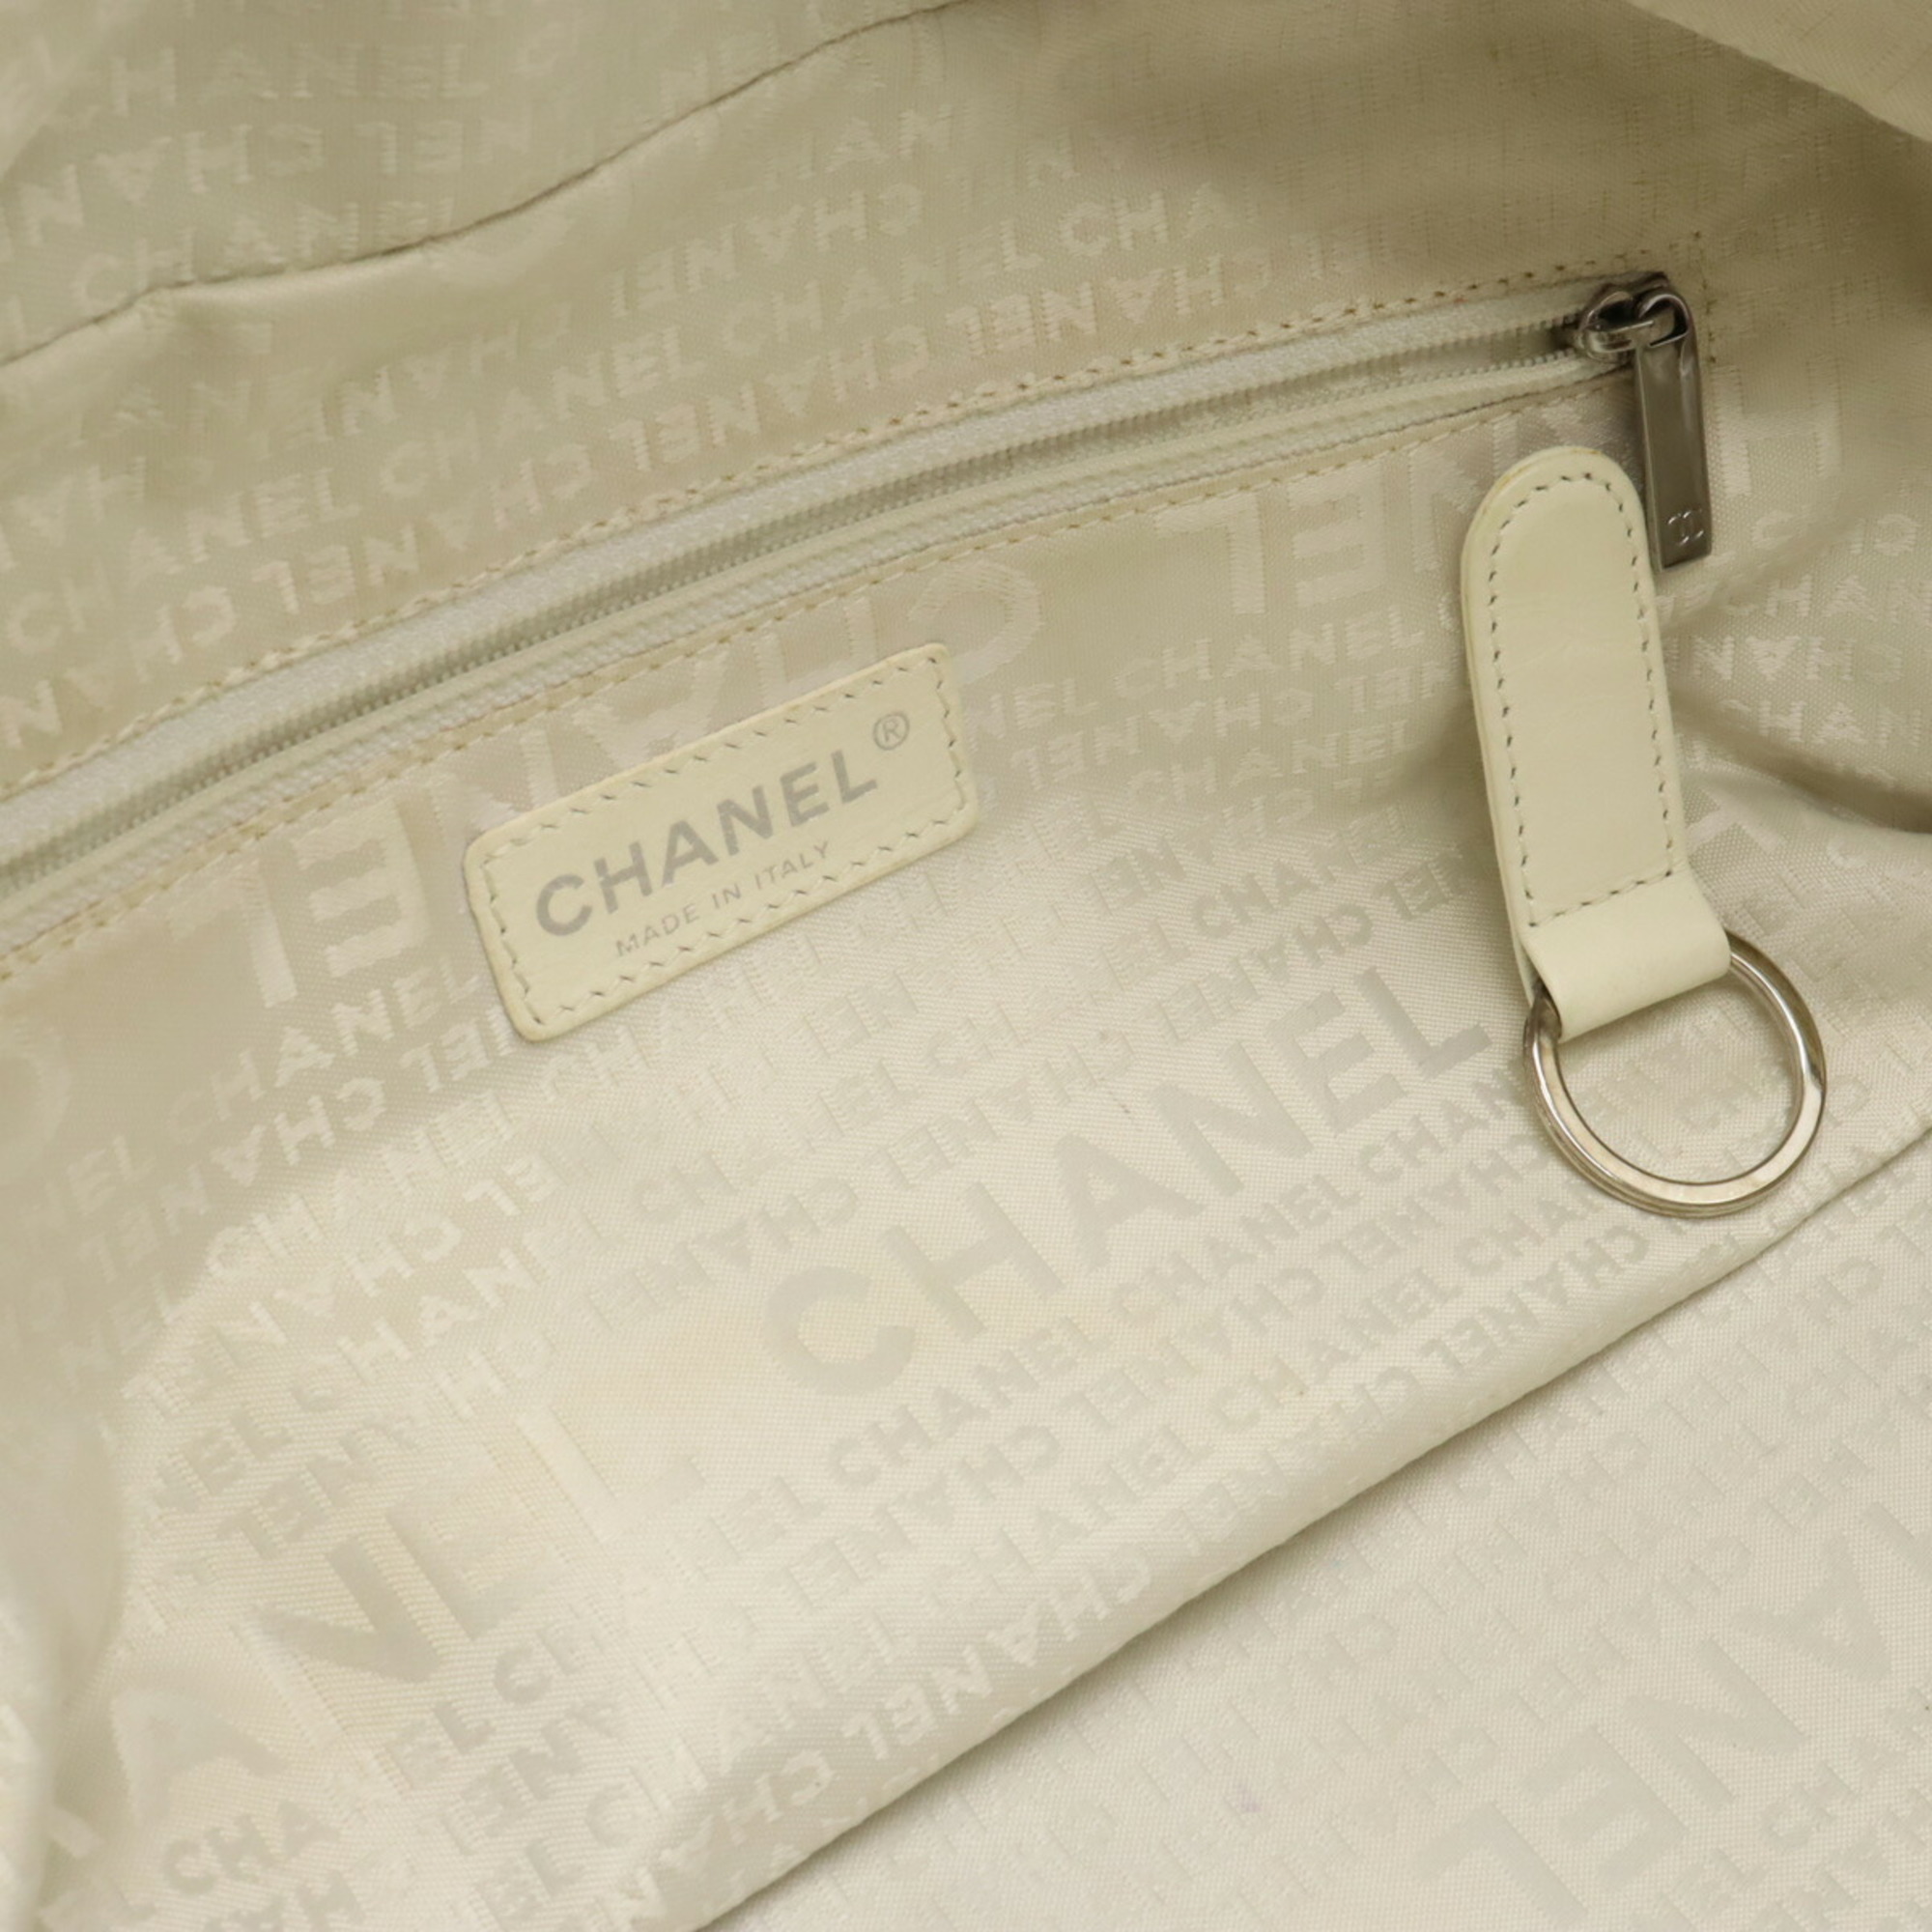 CHANEL Chocolate Bar Shoulder Bag Boston Leather Soft Caviar Skin White A26135